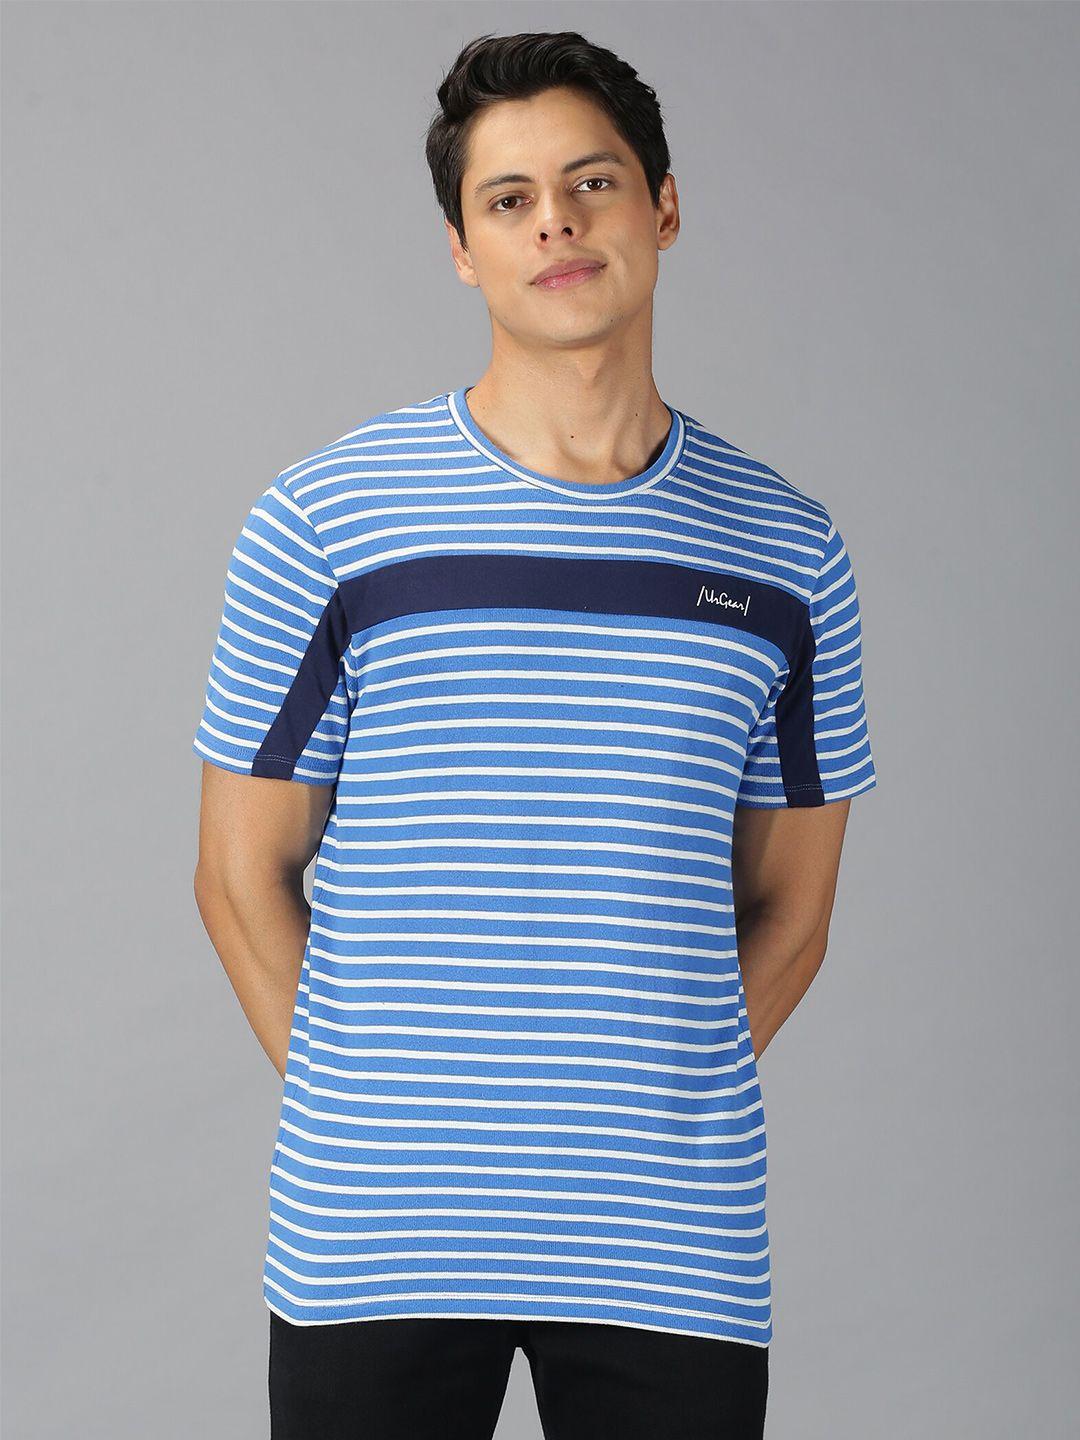 urgear men blue striped t-shirt